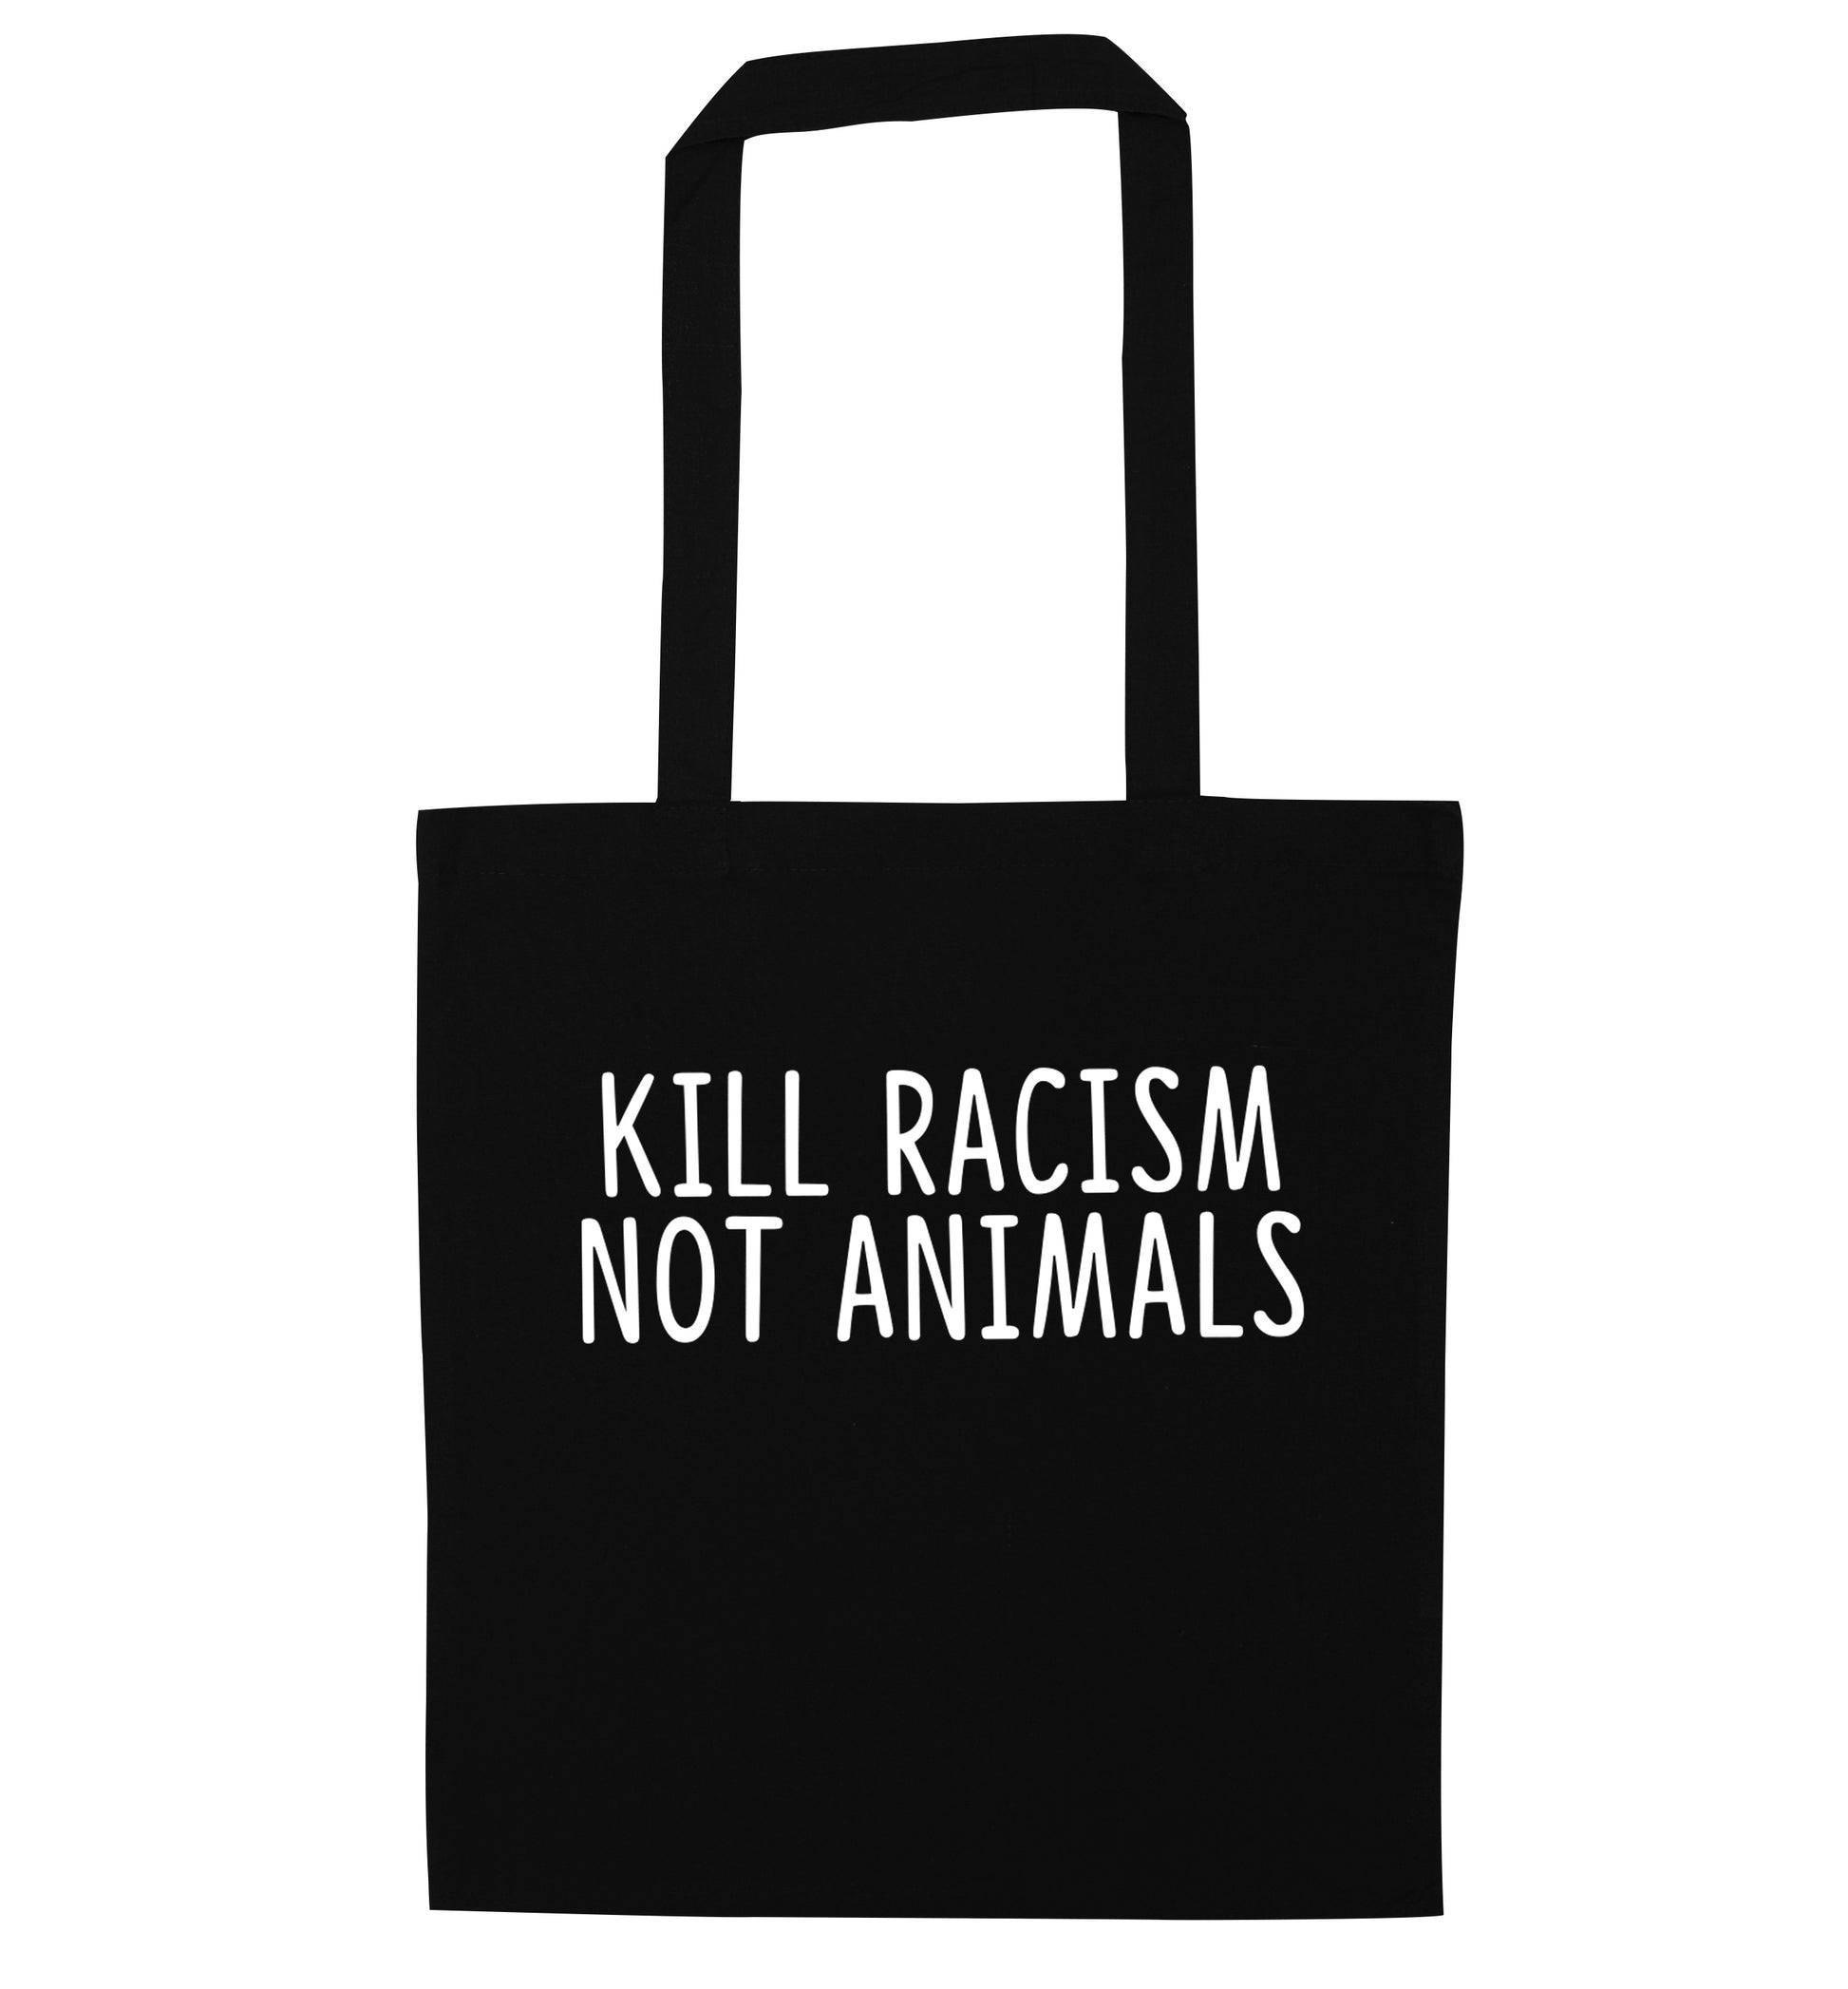 Kill Racism Not Animals black tote bag